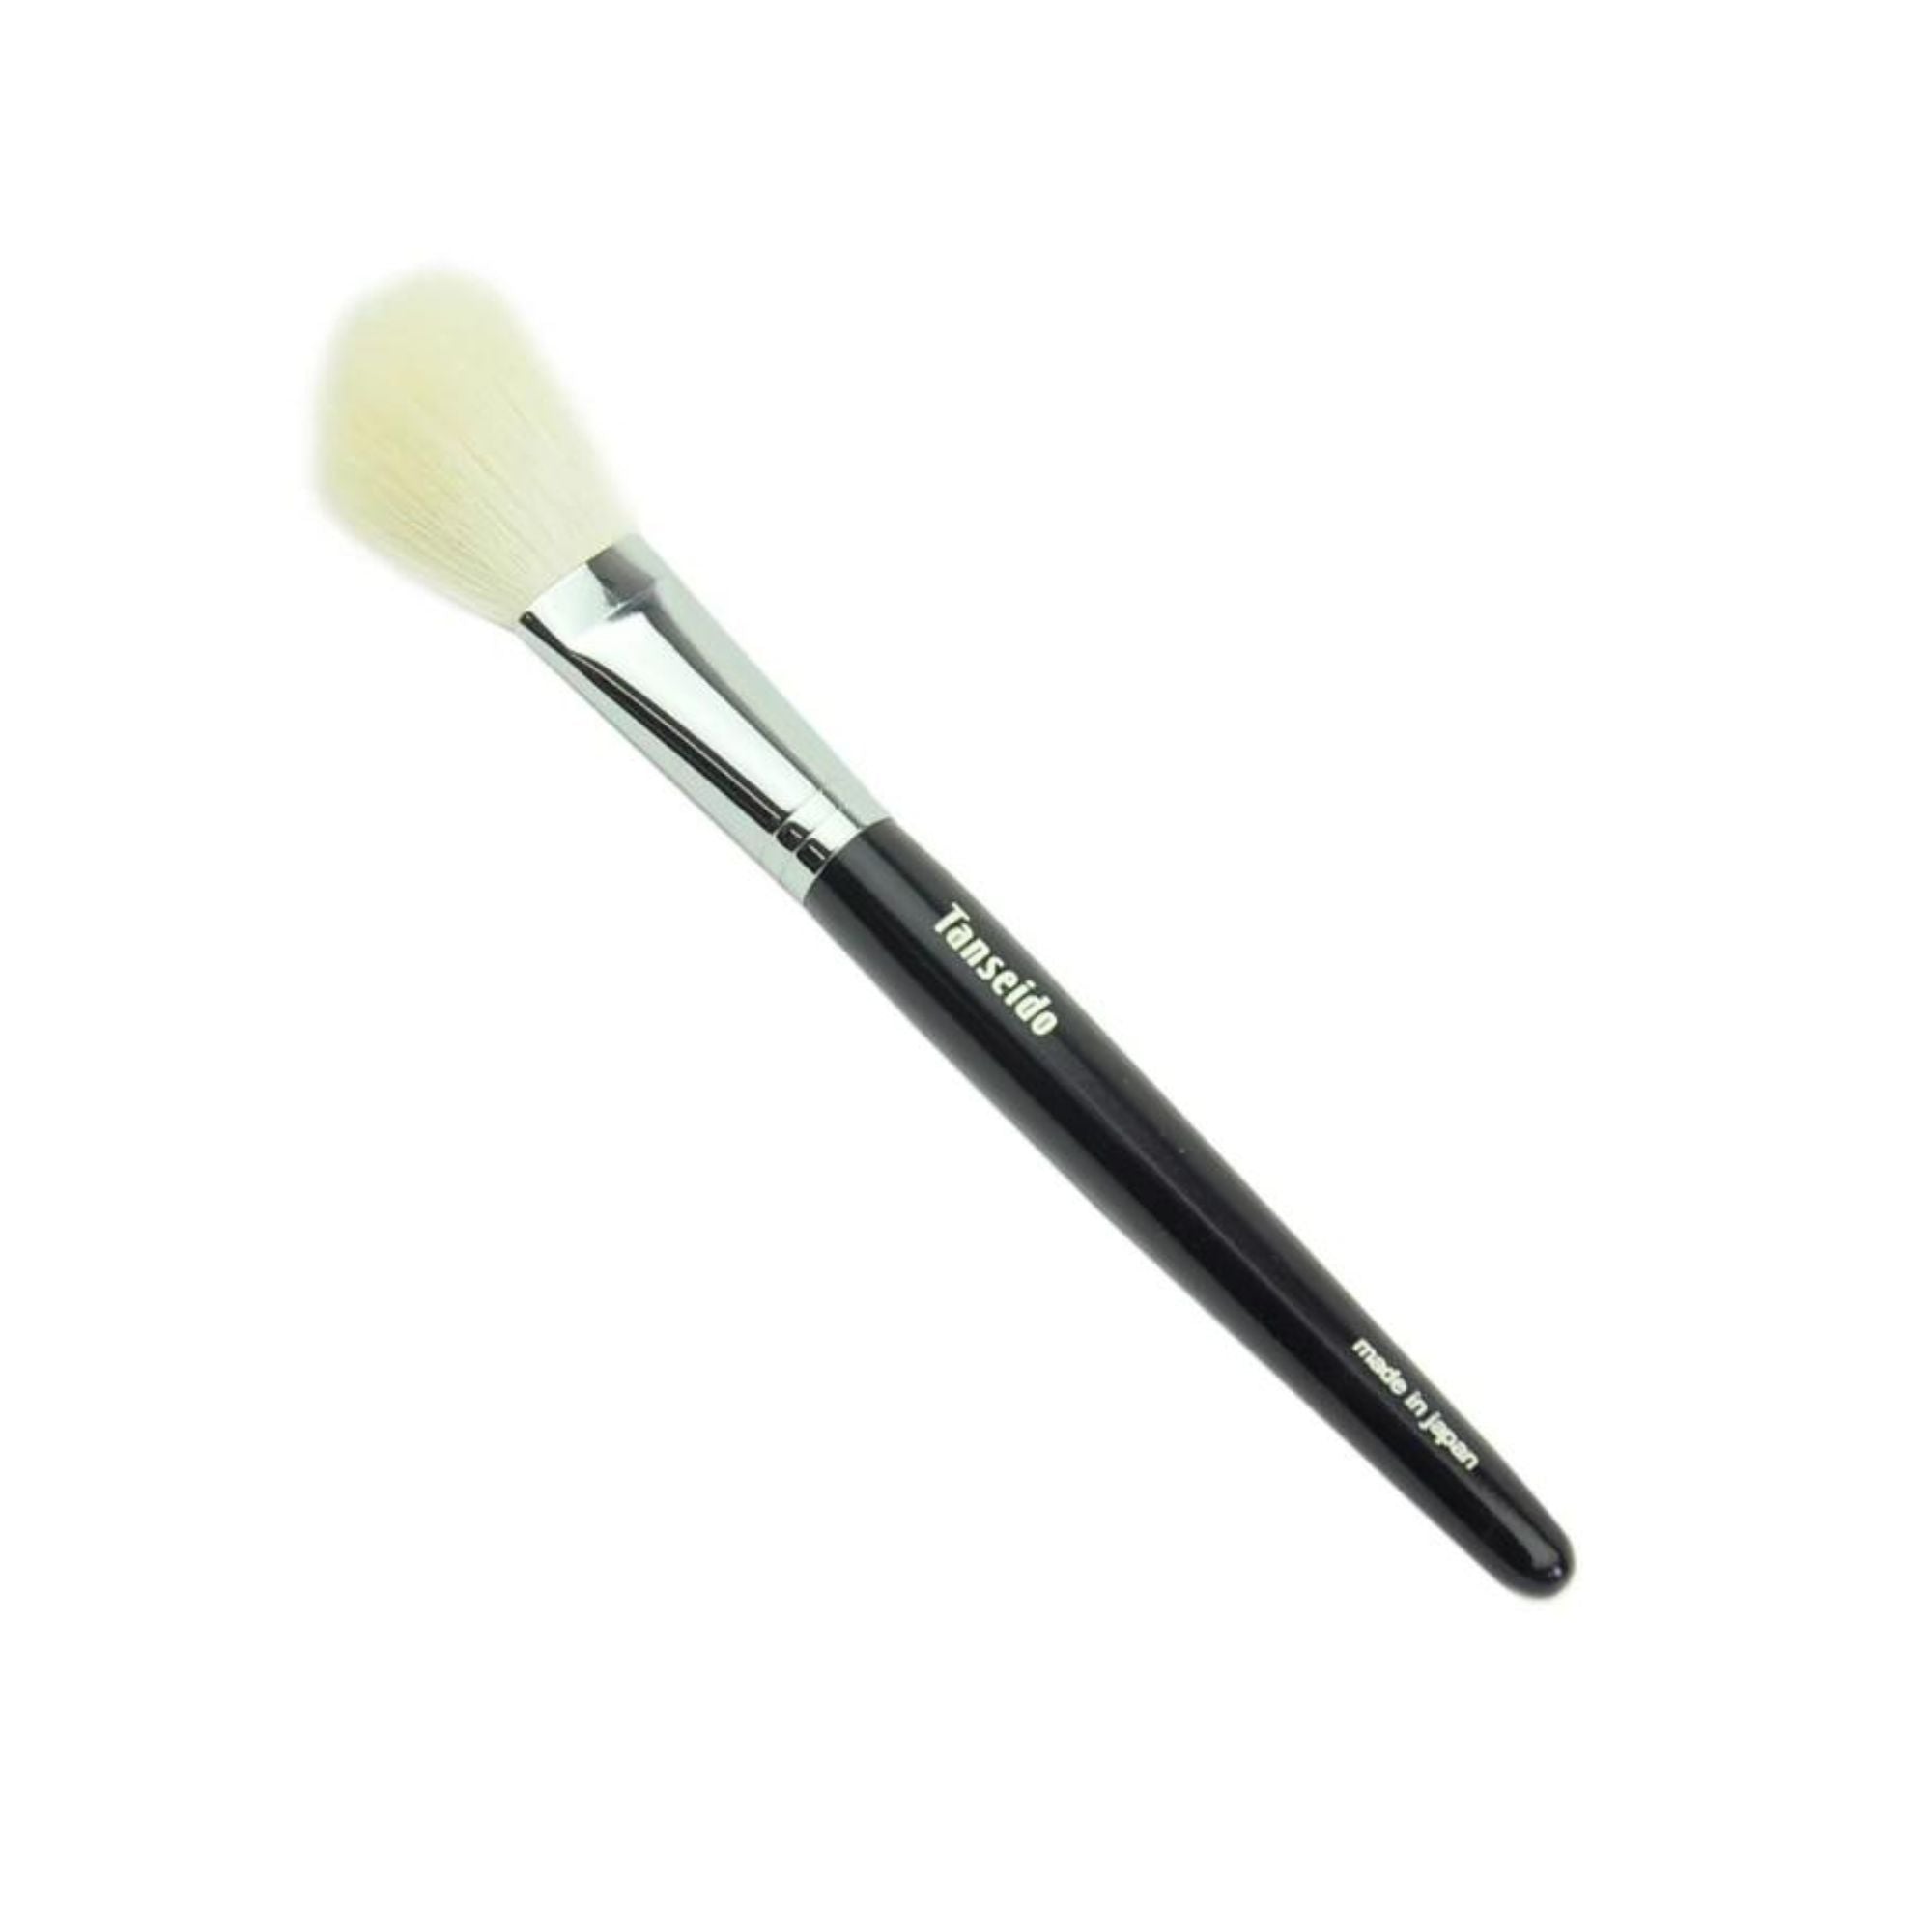 Tanseido Highlight Brush WH14 - Fude Beauty, Japanese Makeup Brushes